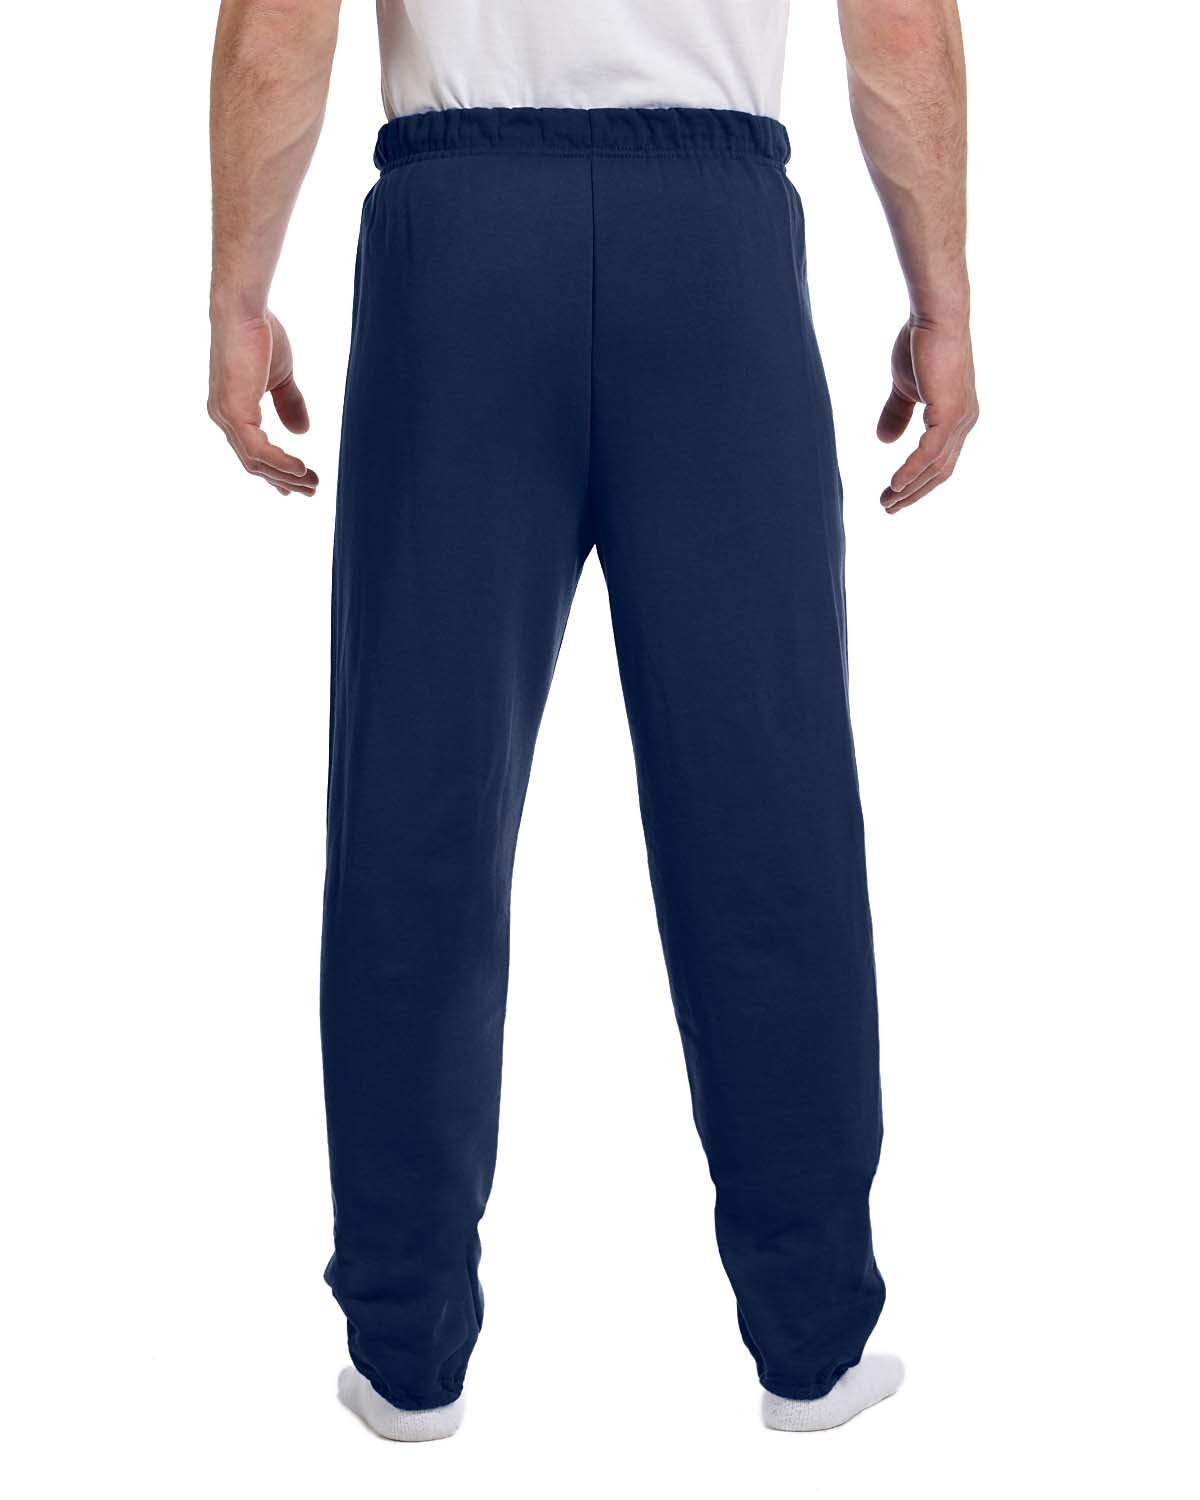 Jerzees Men's and Women's NuBlend Cotton/ Poly Sweatpants 973M S-3XL | eBay